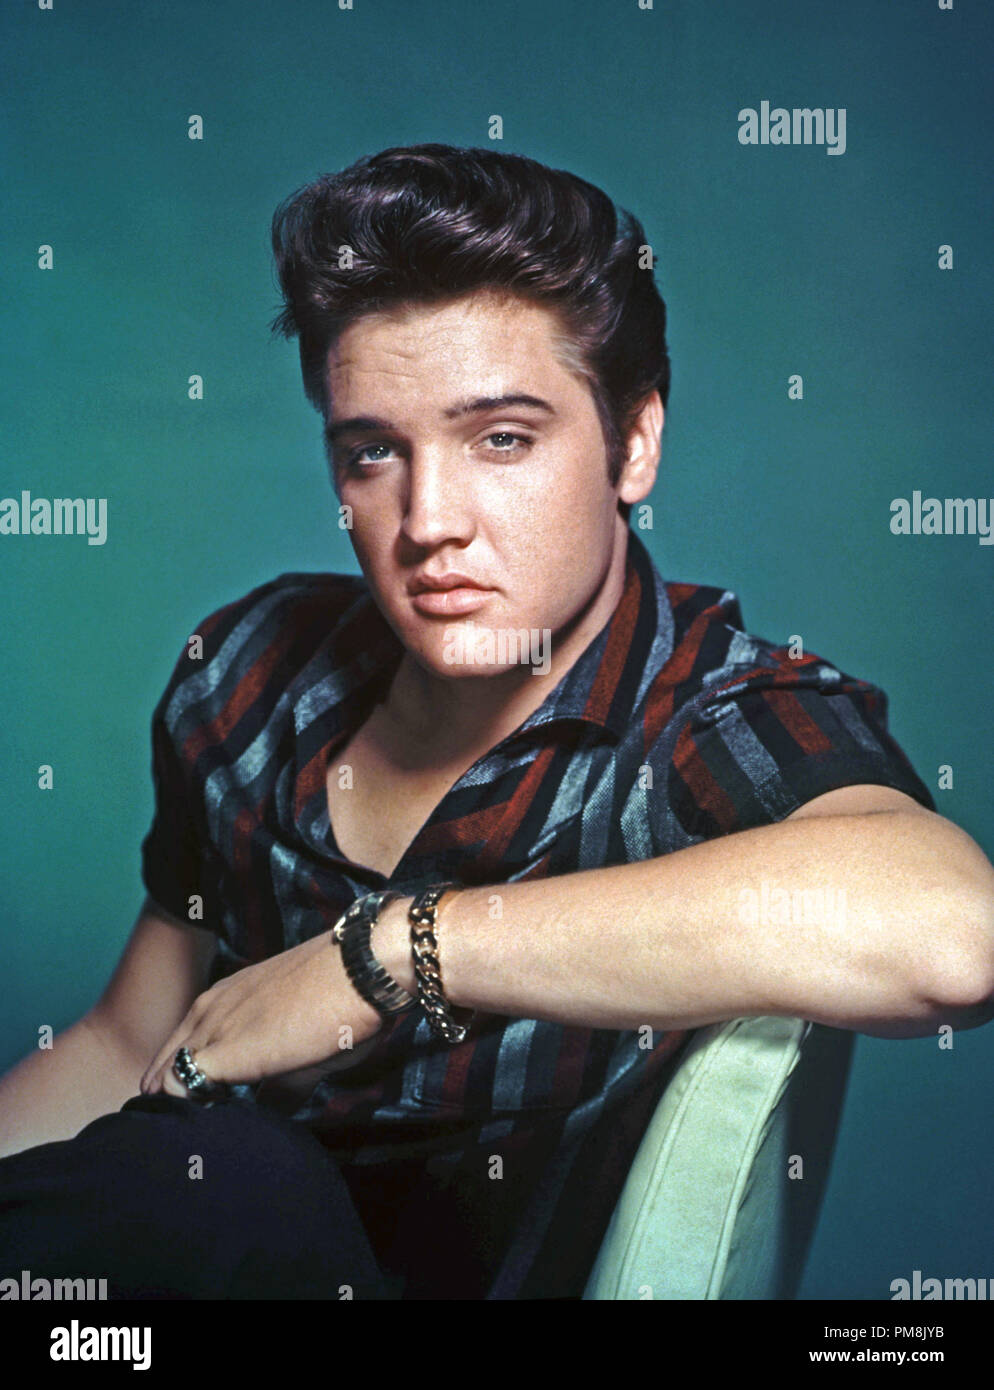 (Archivierung klassische Kino - Elvis Presley Retrospektive) Elvis Presley, circa 1957. Datei Referenz # 31616 067 THA Stockfoto